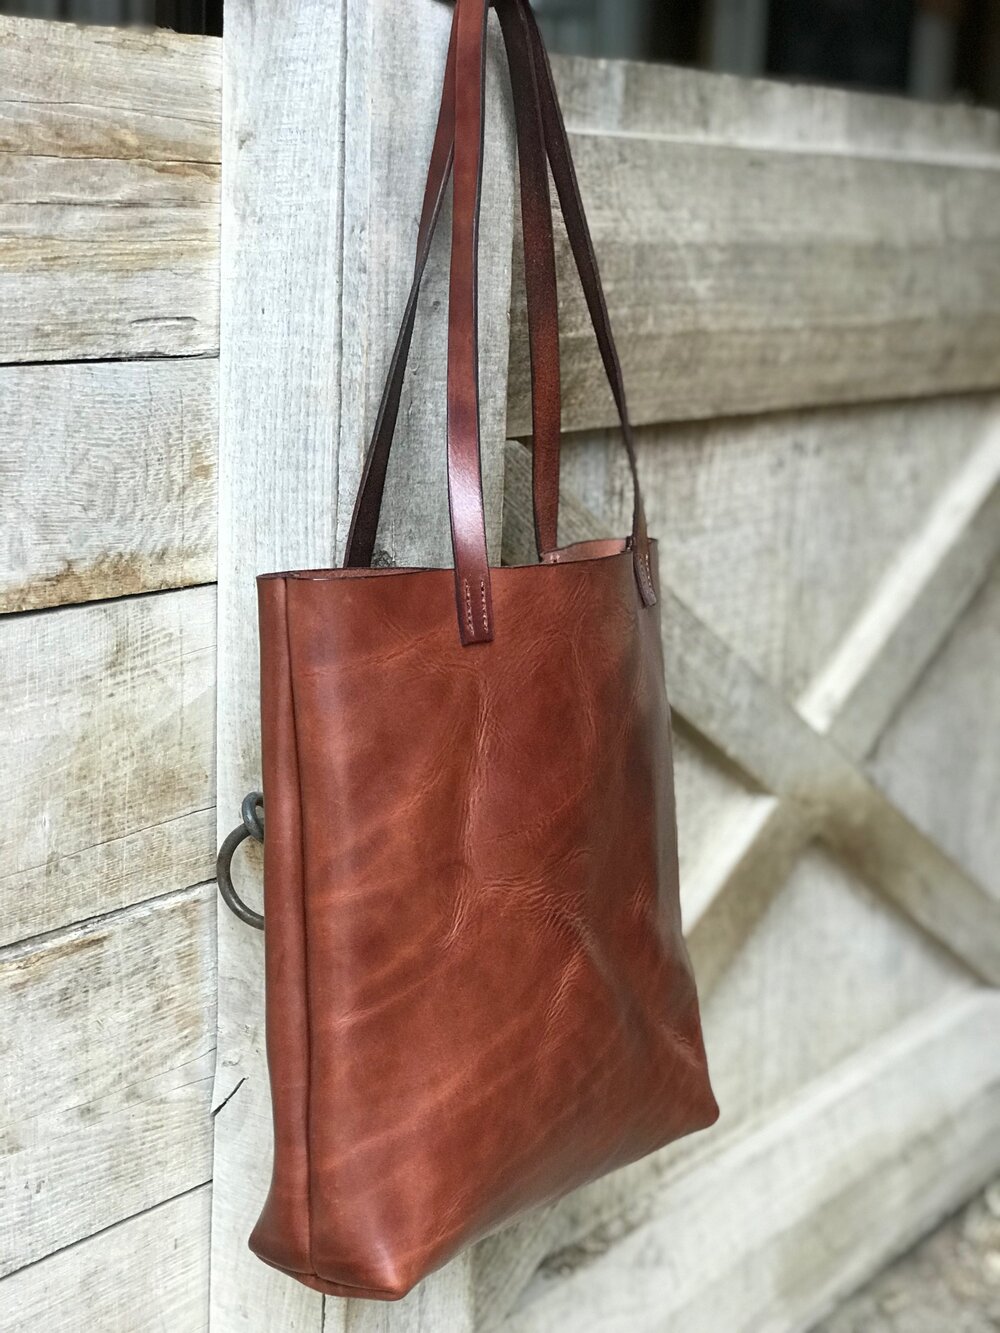 $300,000 handbags no crock, Farm Online